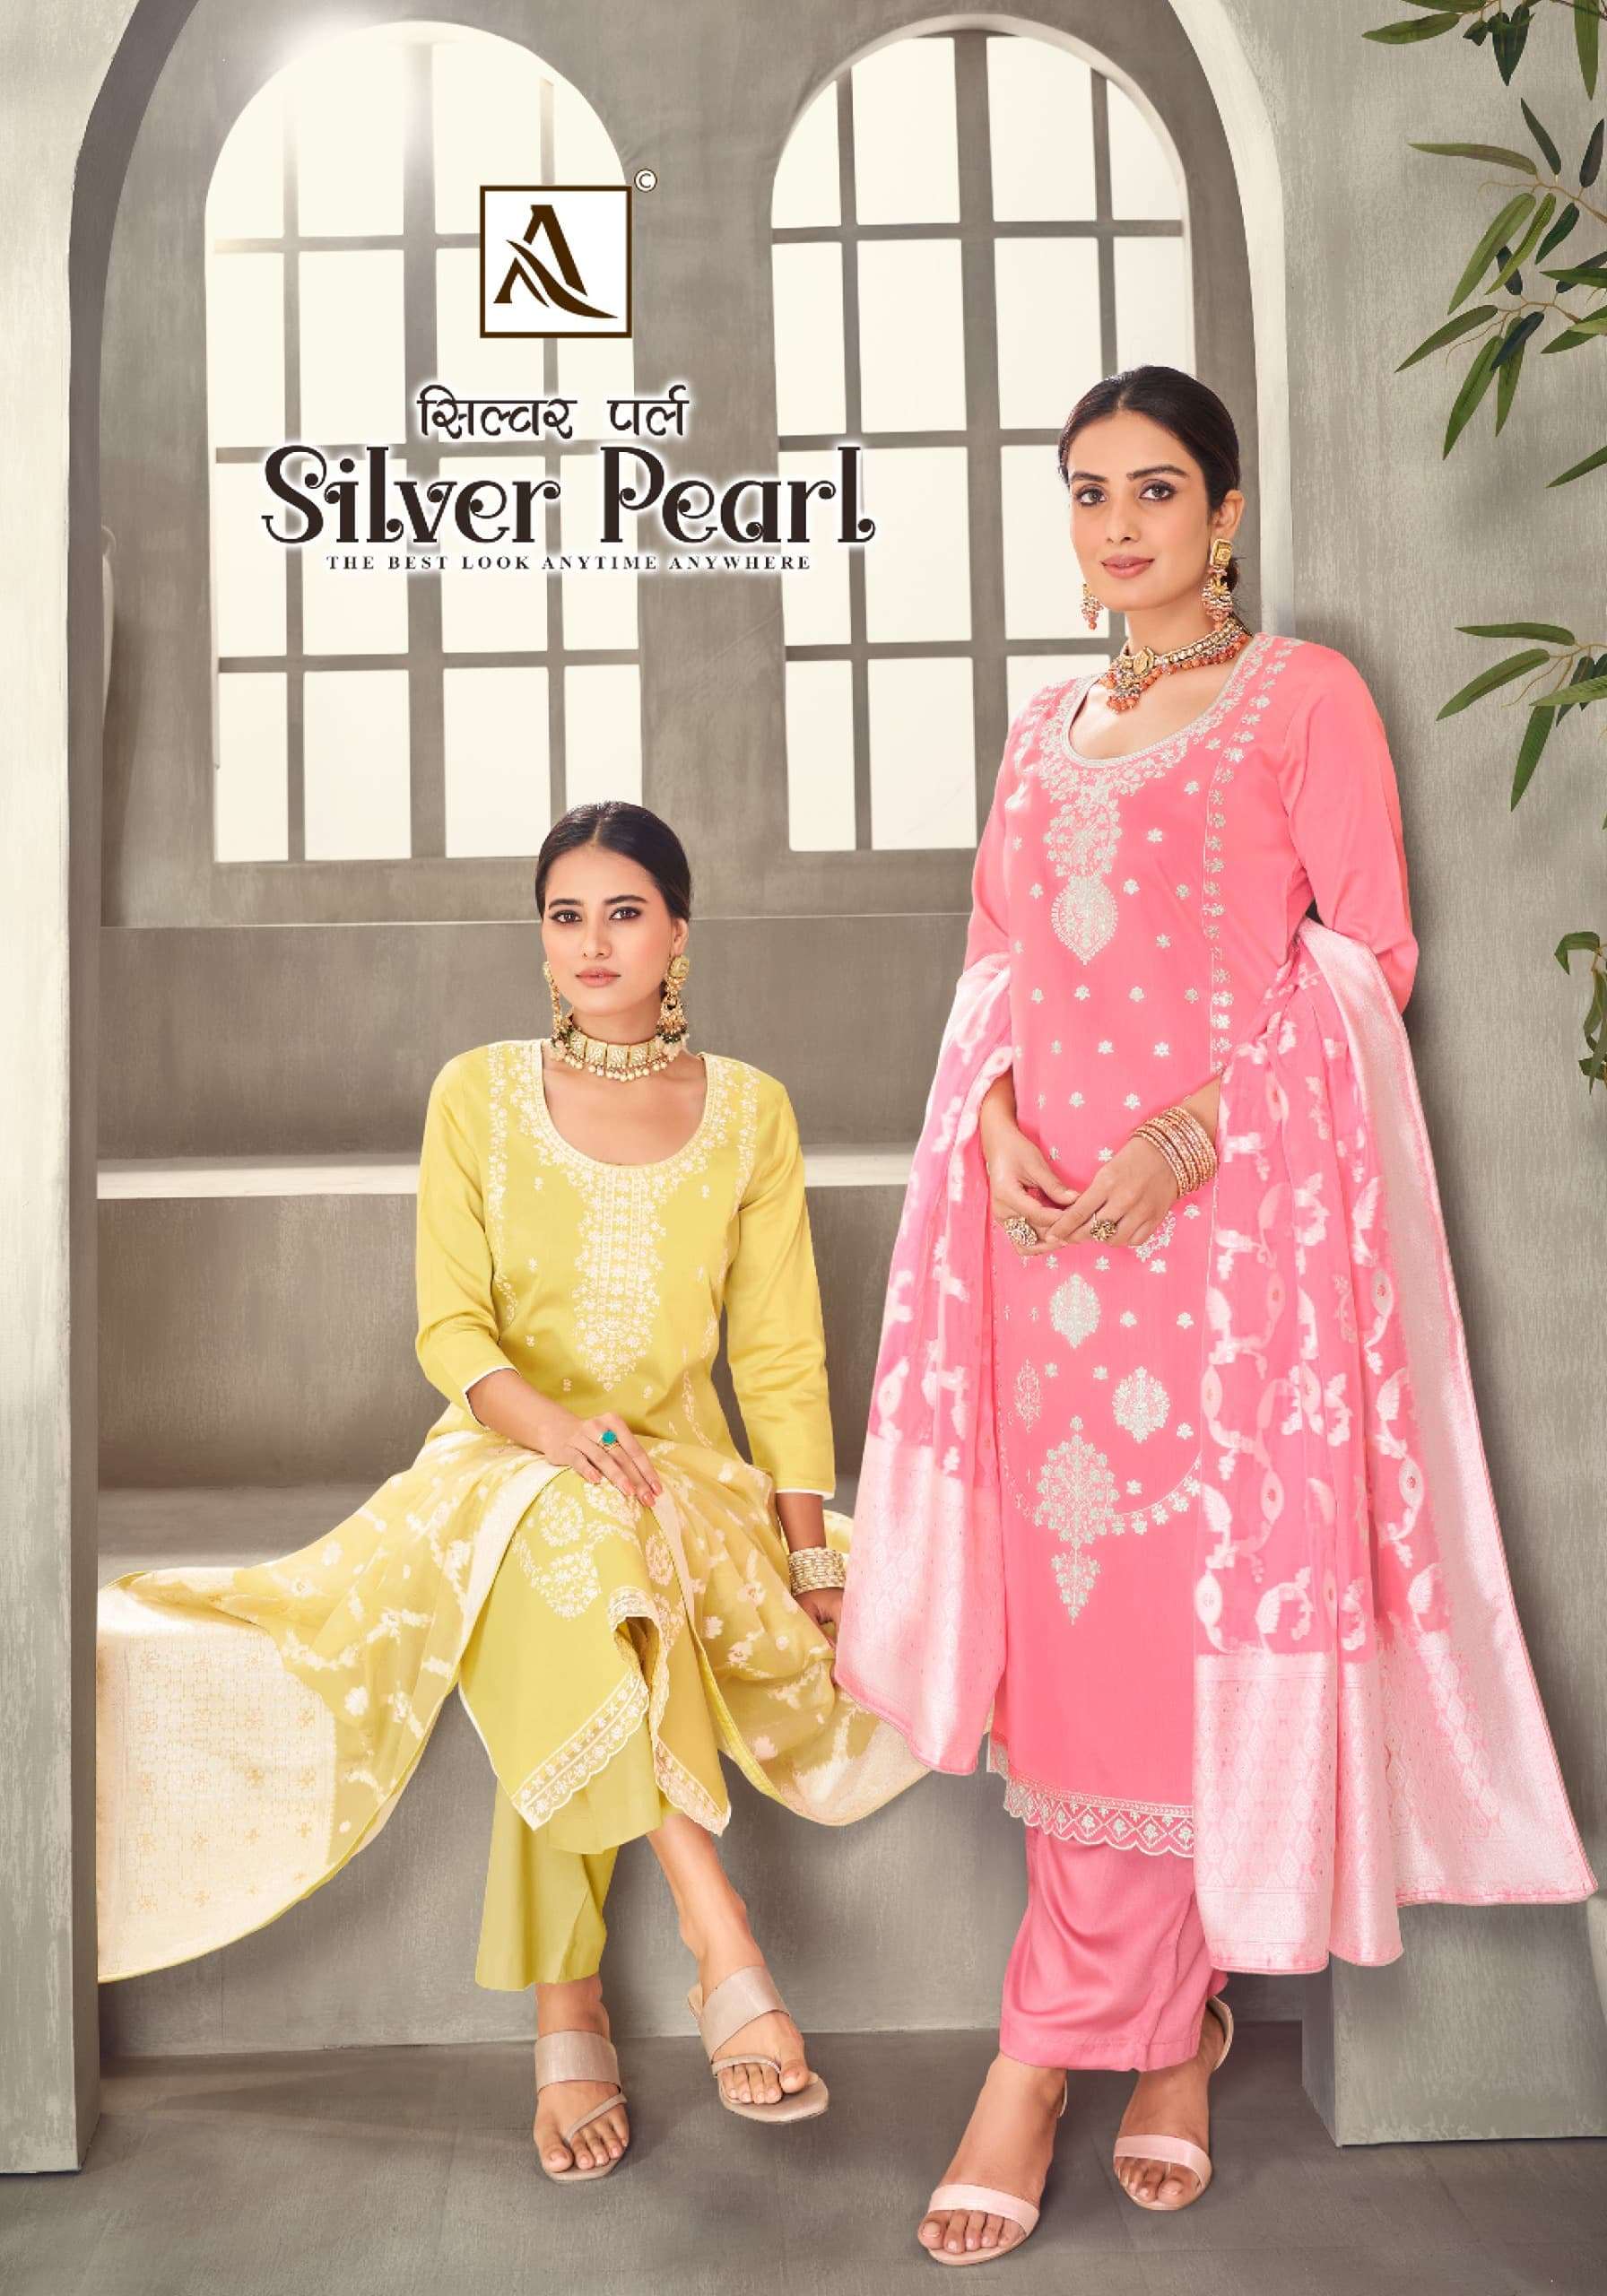 Alok Suit Silver Pearl Festive Wear Cotton Salwar Suit Catalog Exporters